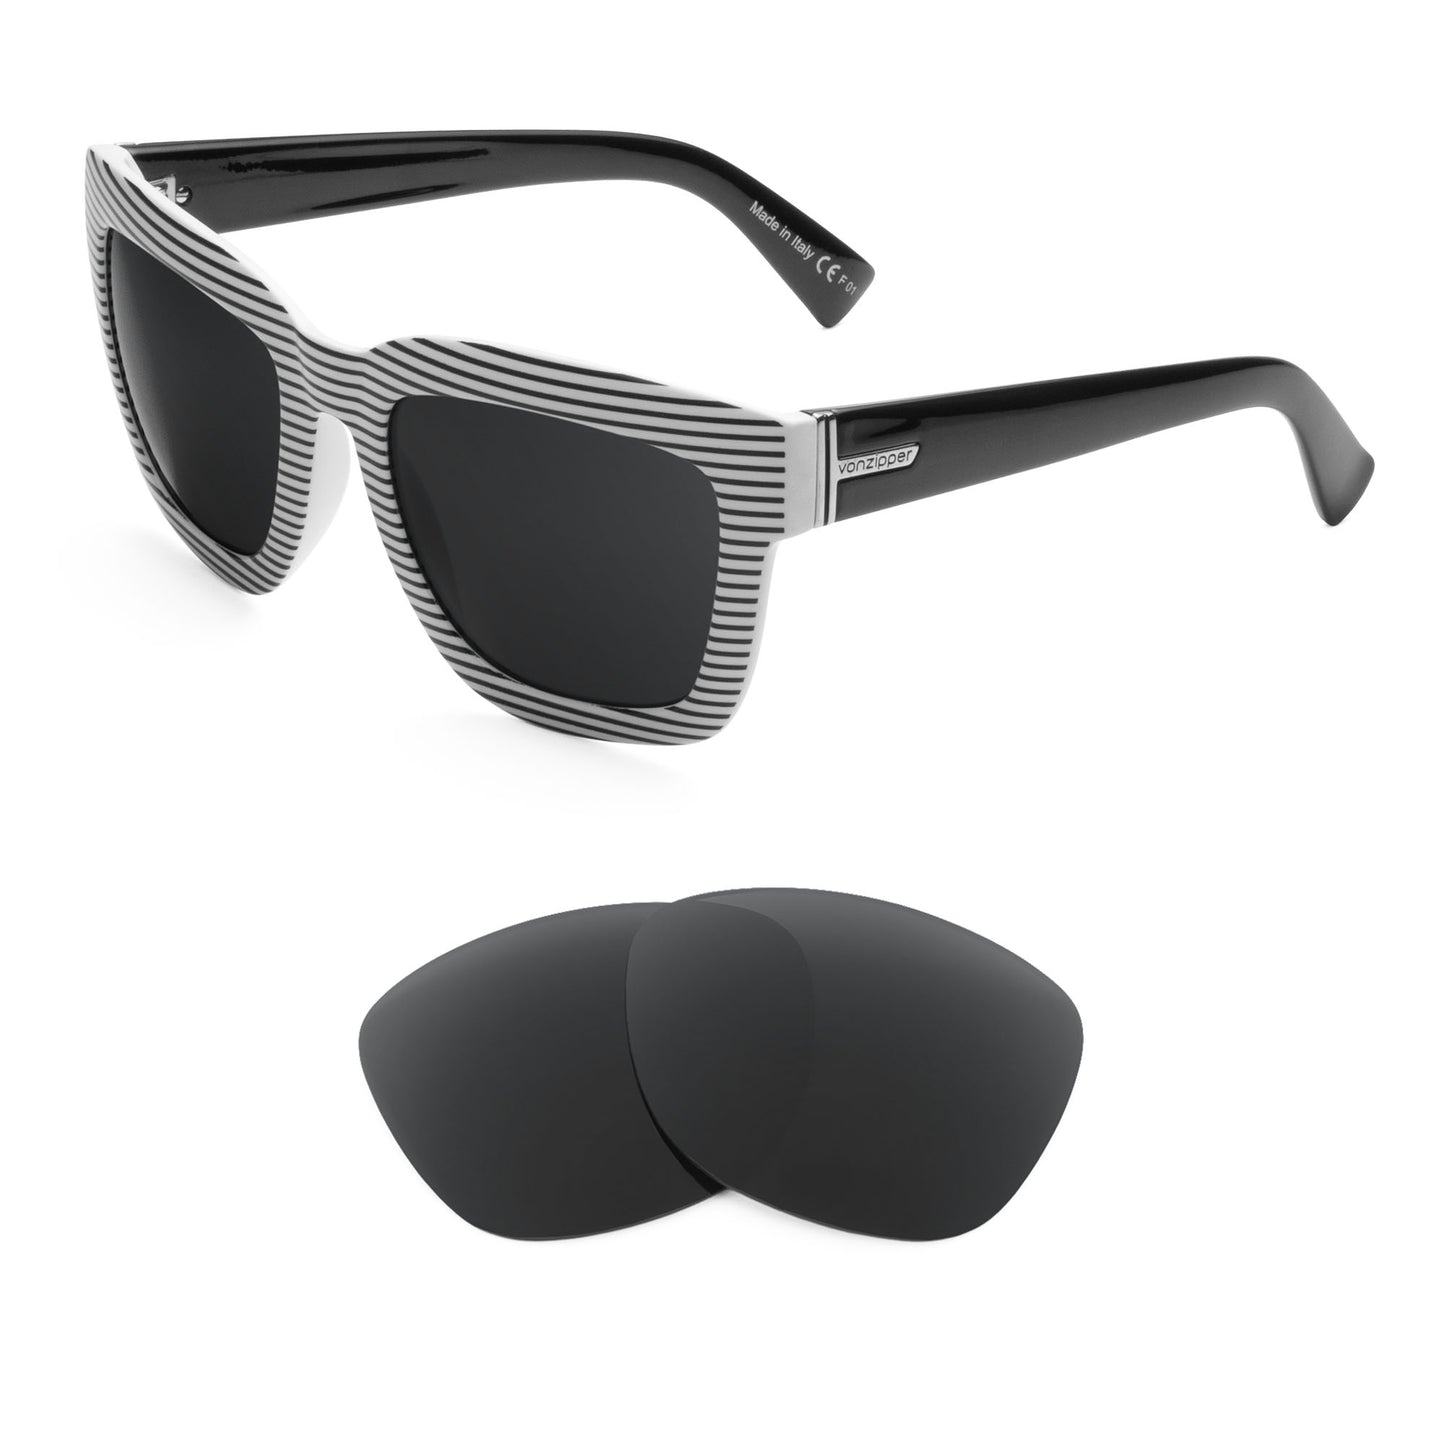 VonZipper Juice sunglasses with replacement lenses